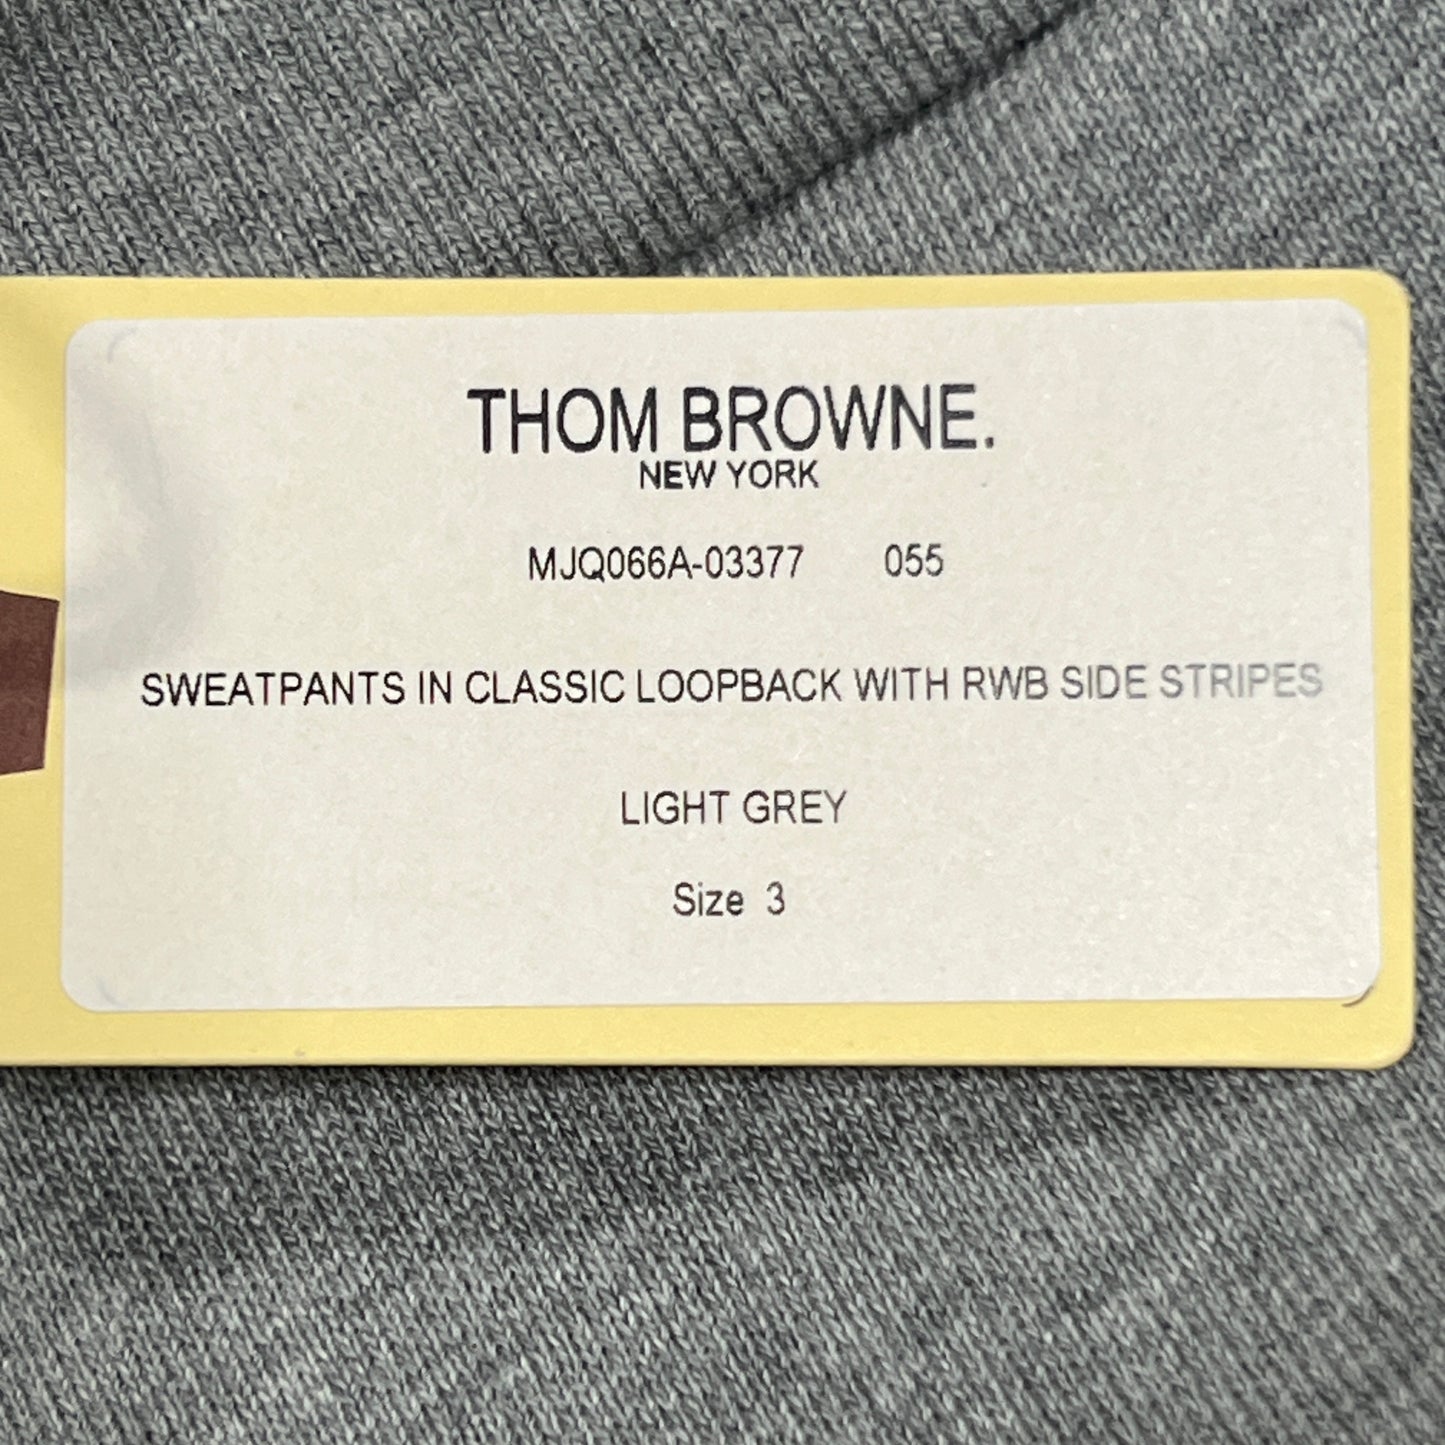 THOM BROWNE Sweat Pants in Classic LoopBack w/RWB Side Stripes Light Grey Size 3 (New)